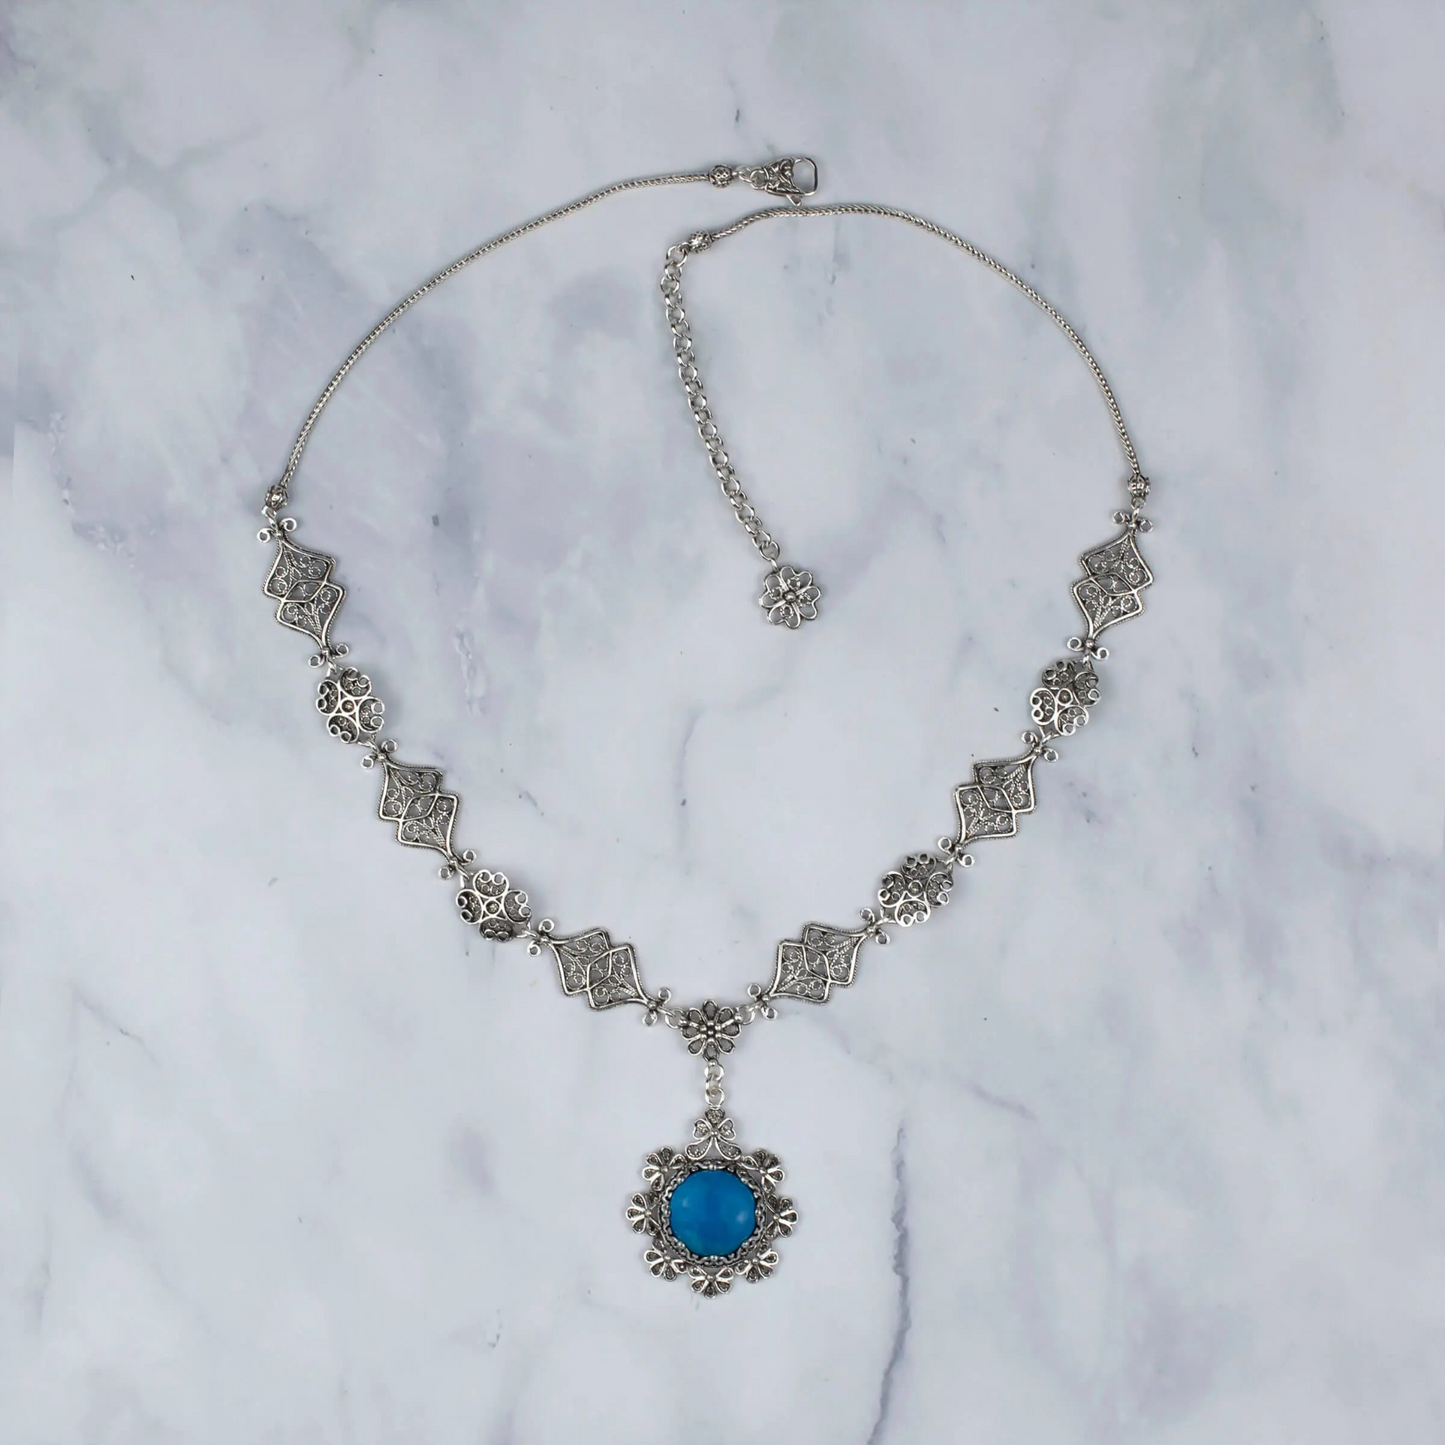 Filigree Art Turquoise Gemstone Women Silver Choker Necklace